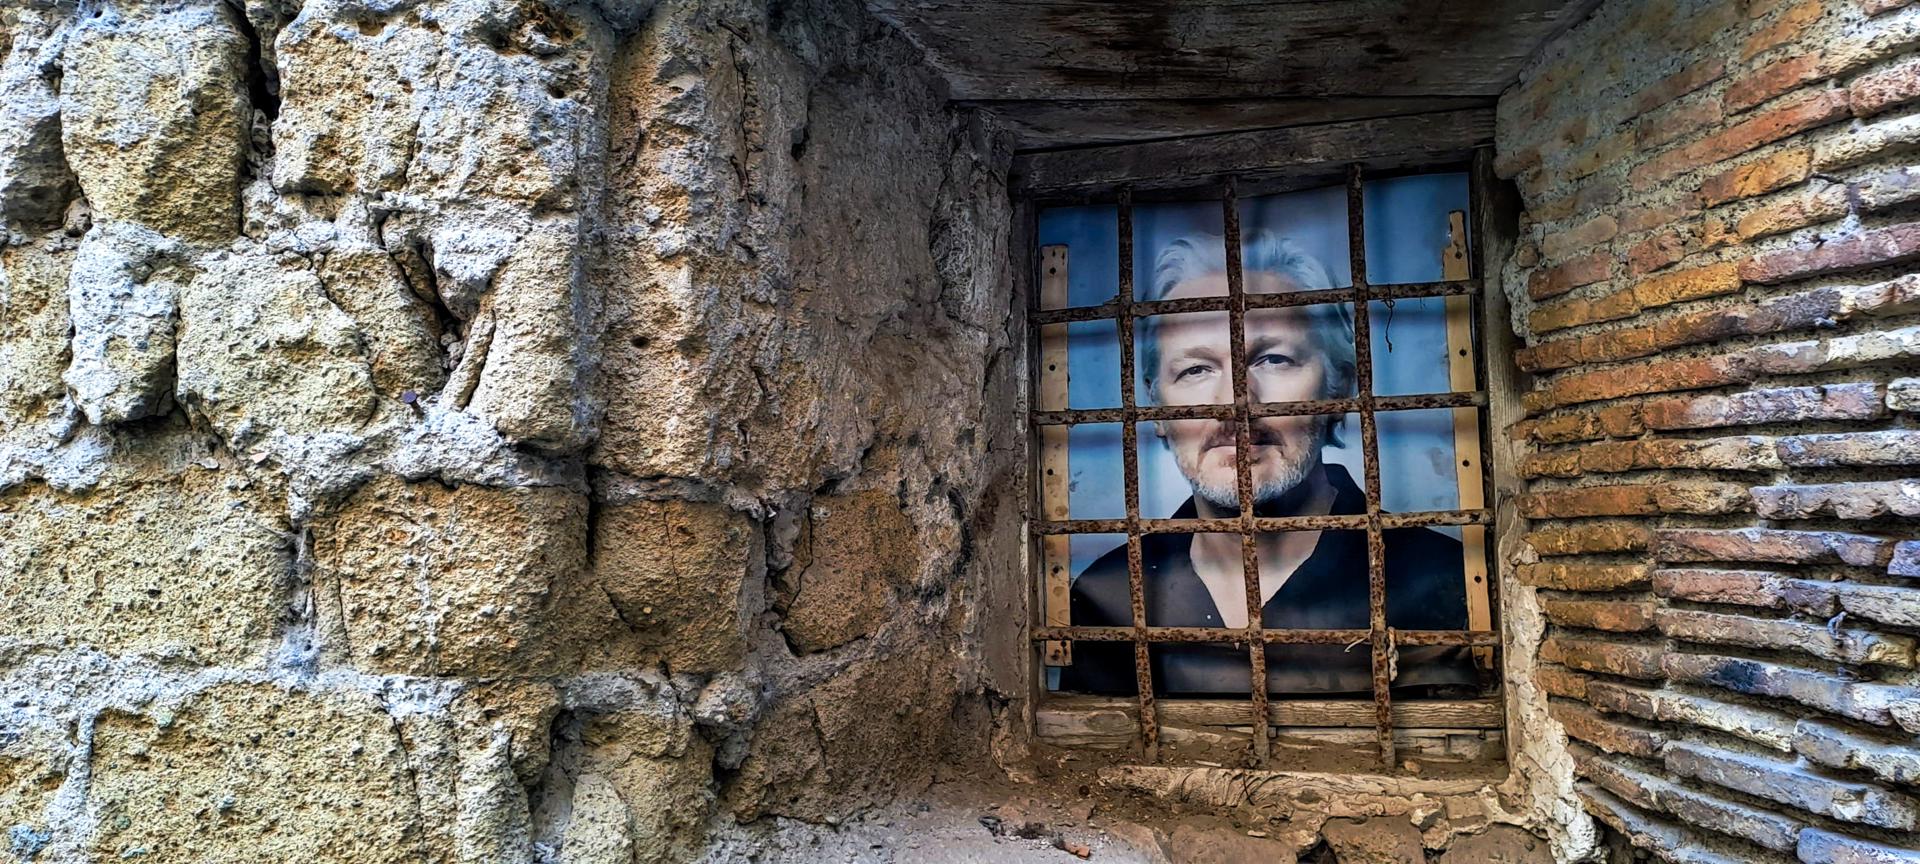 Julian Assange, el héroe o villano que acabó pactando su libertad